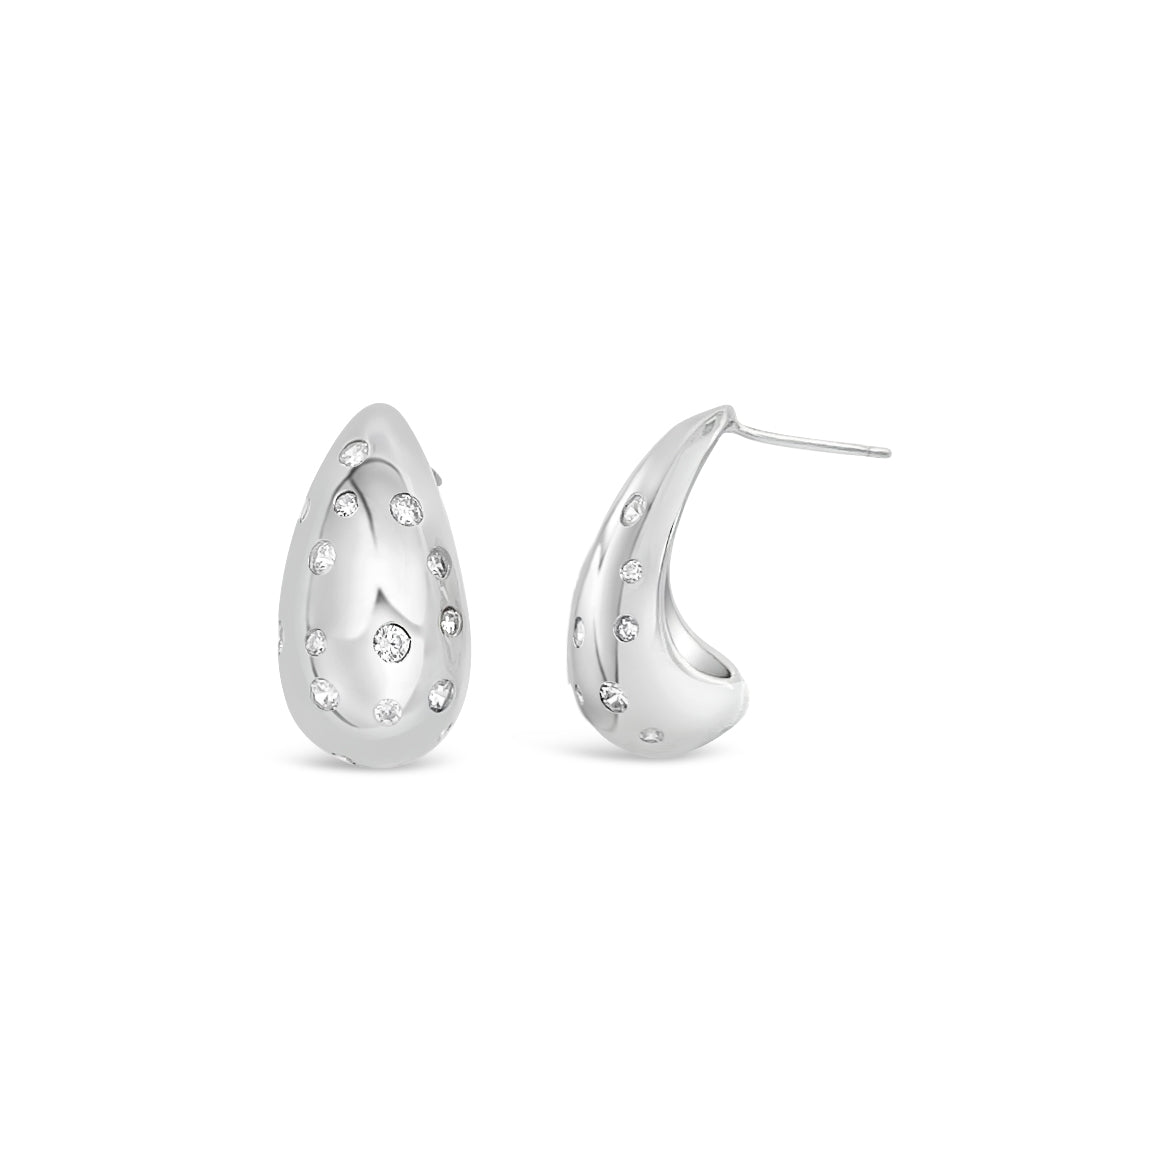 Tear Drop Filled With CZ Stone Stud Earrings (L335A)